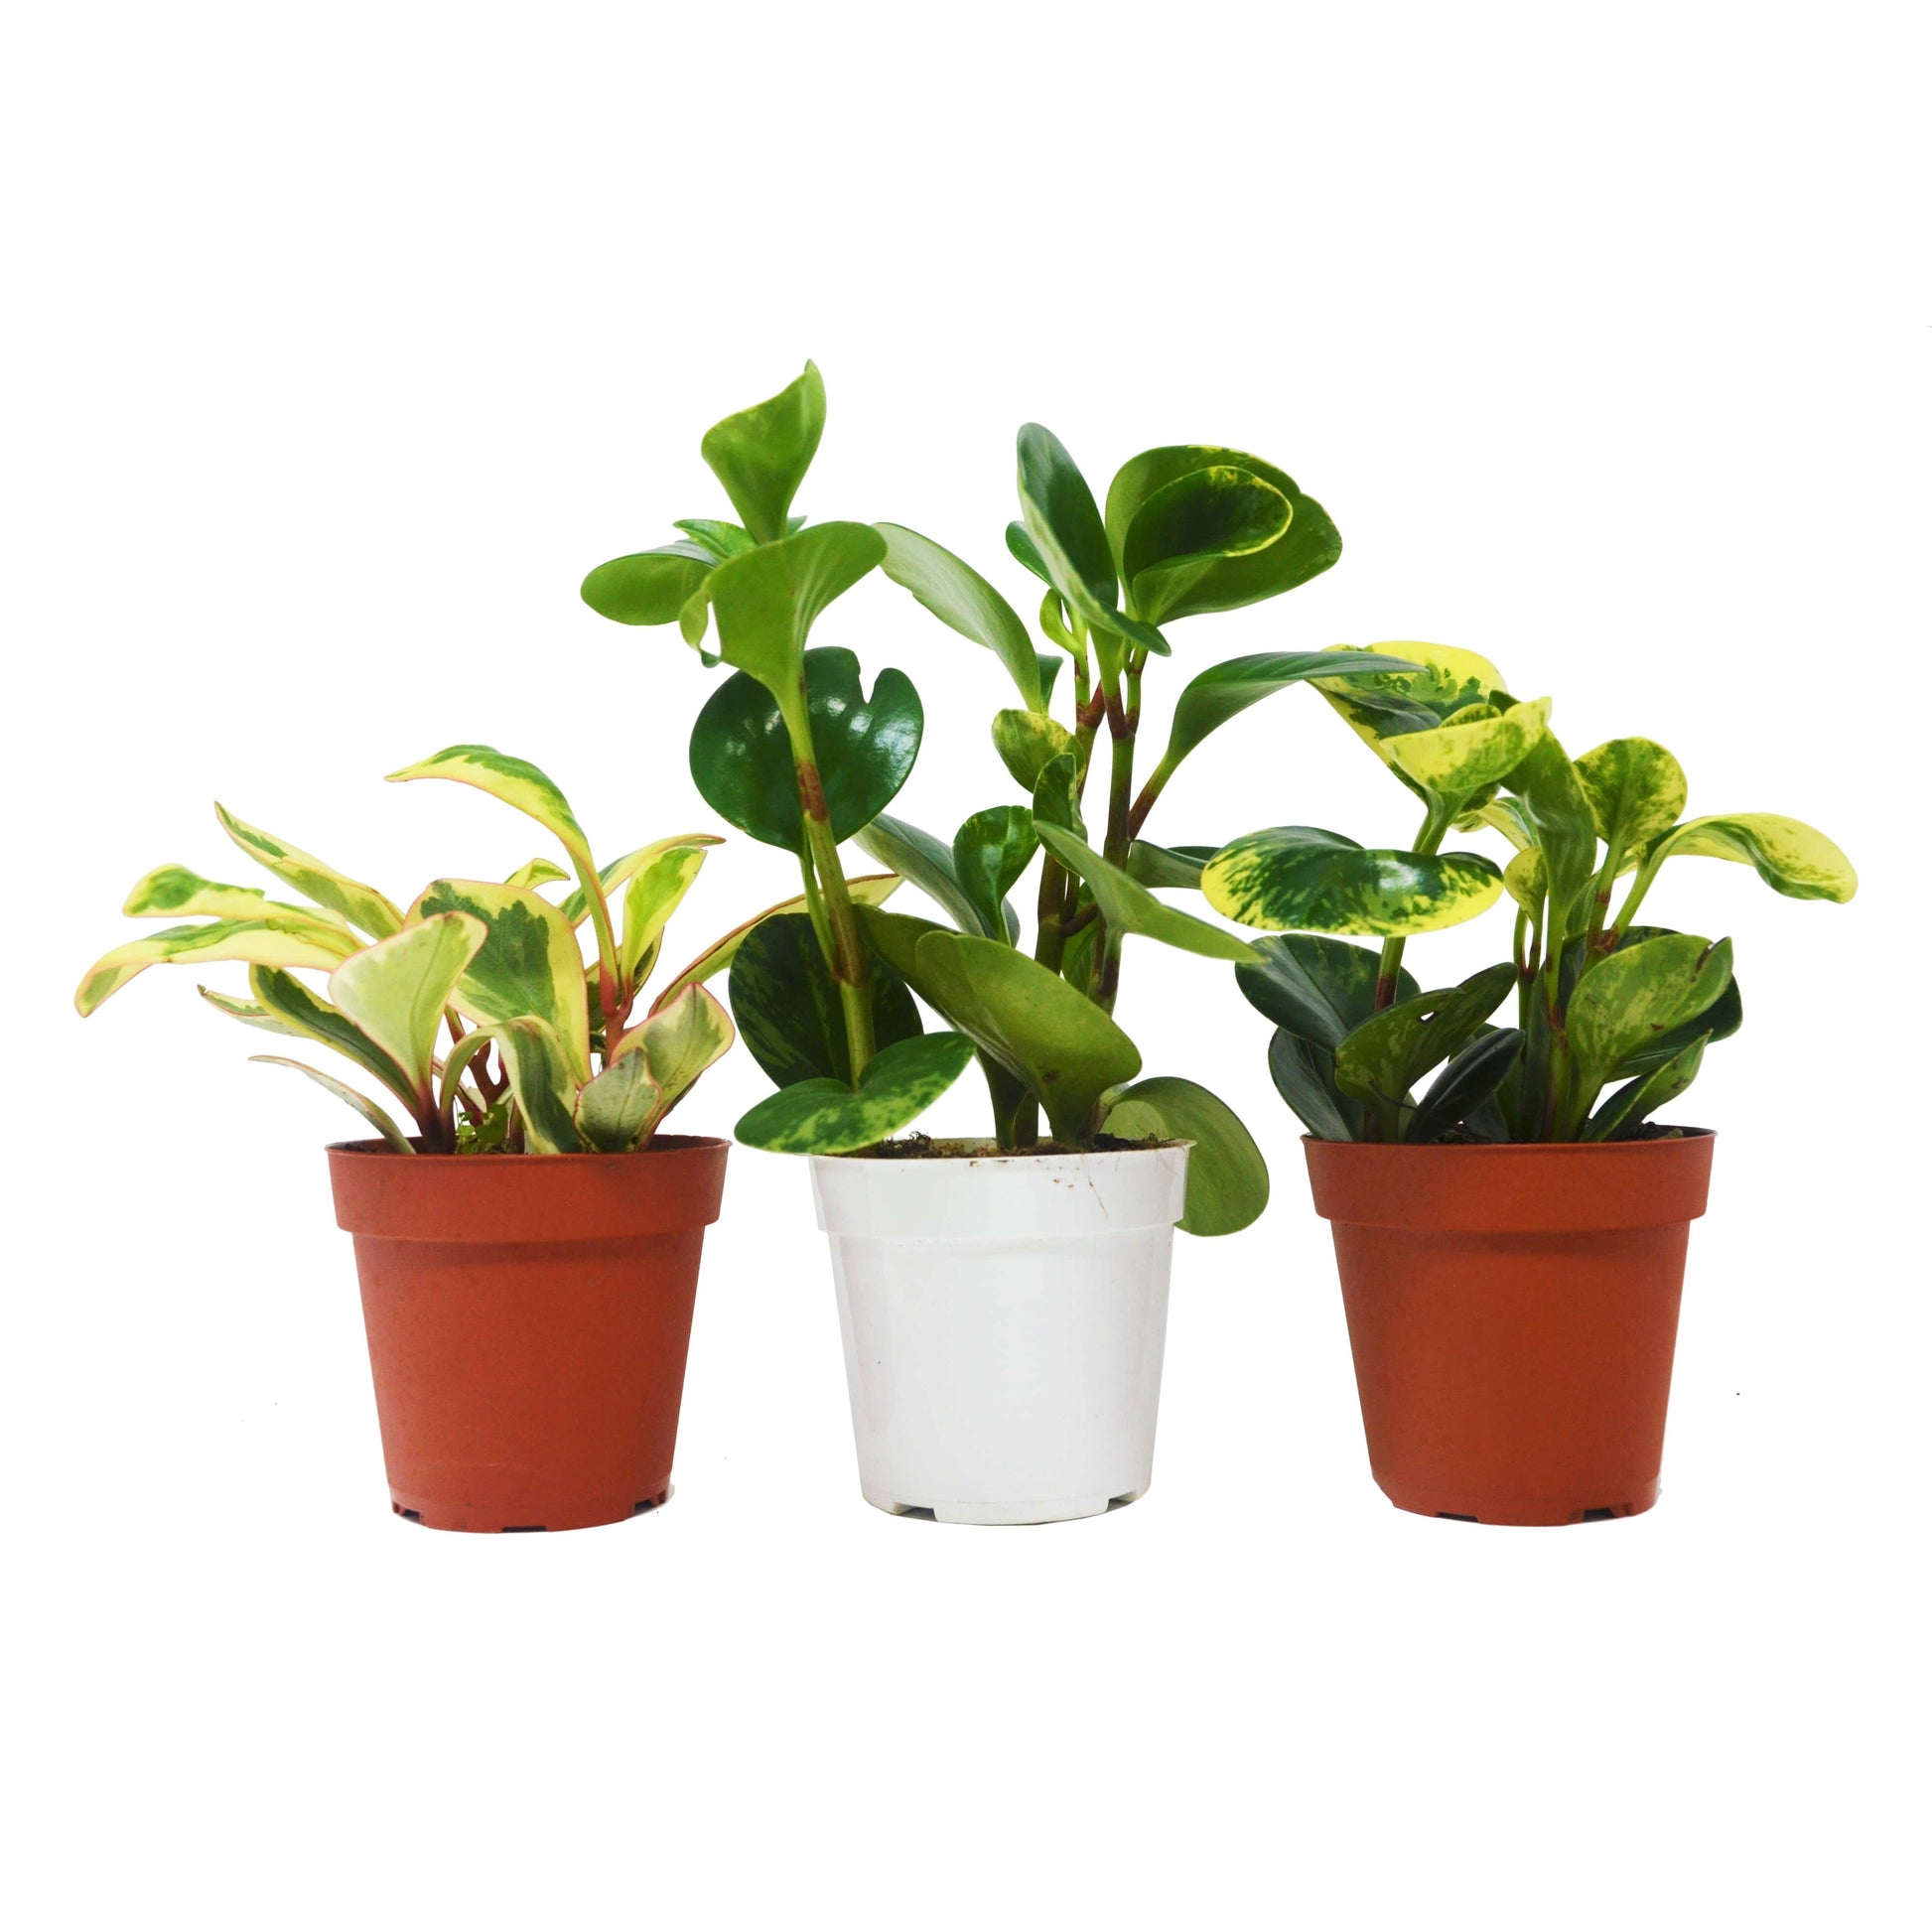 3 Different Peperomia Plants in 4" Pots - Baby Rubber Plants - Plantonio